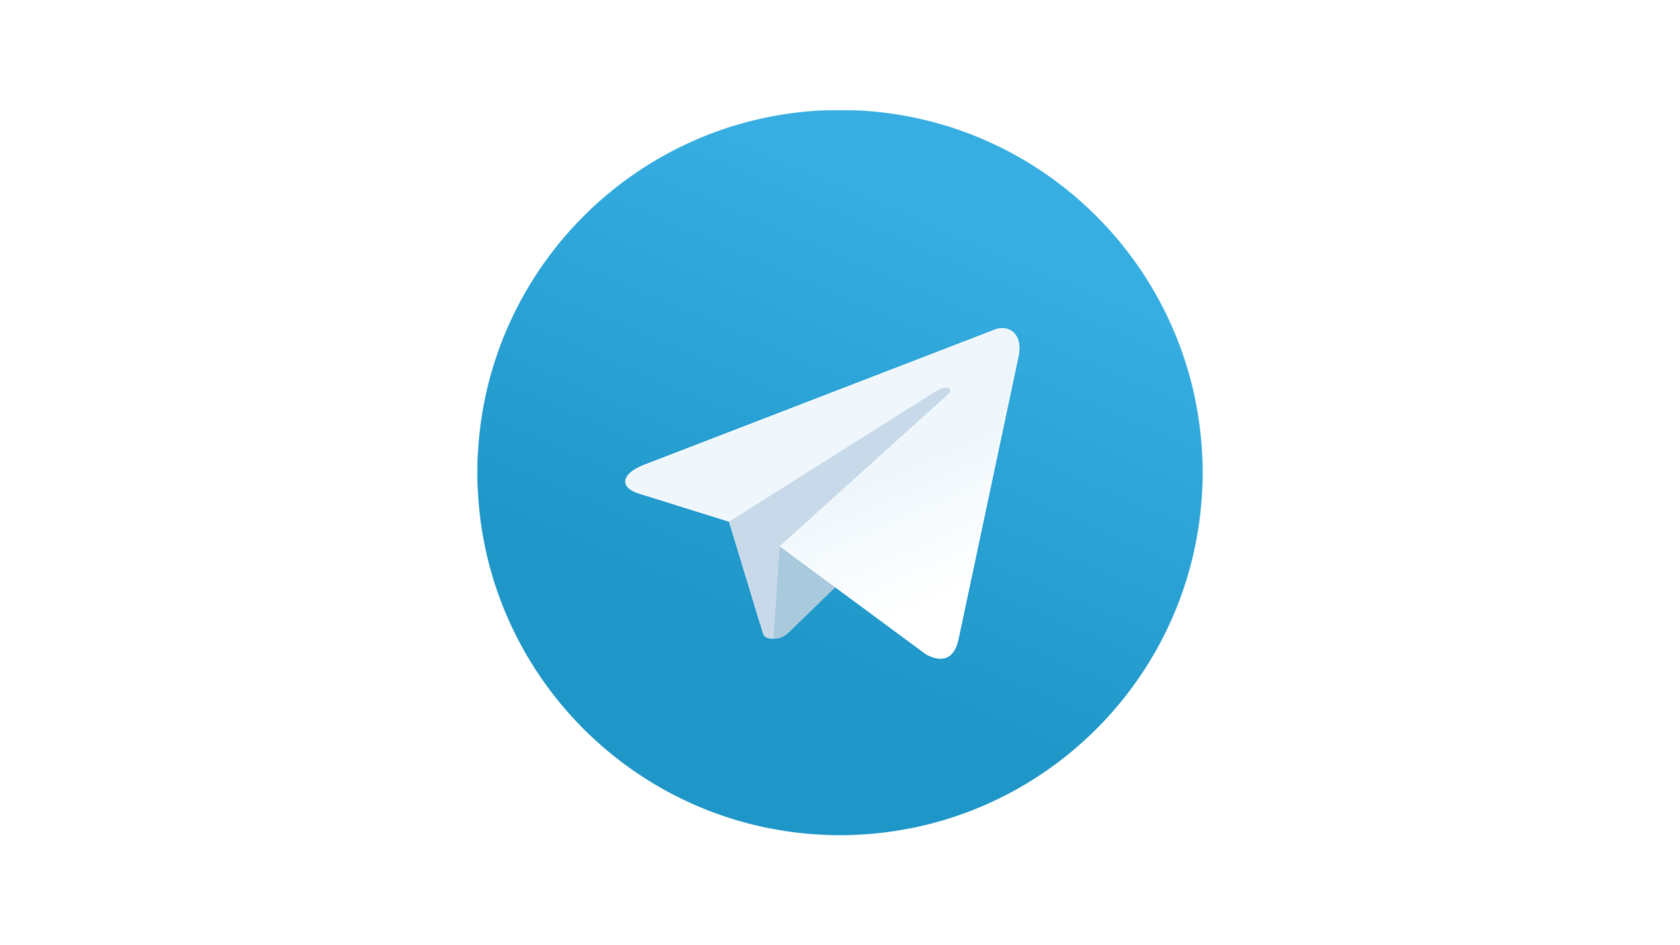 Тот самый тг канал. Телеграмм. Иконка телеграмм. Пиктограмма телеграмм. Логотип телеграм на прозрачном фоне.